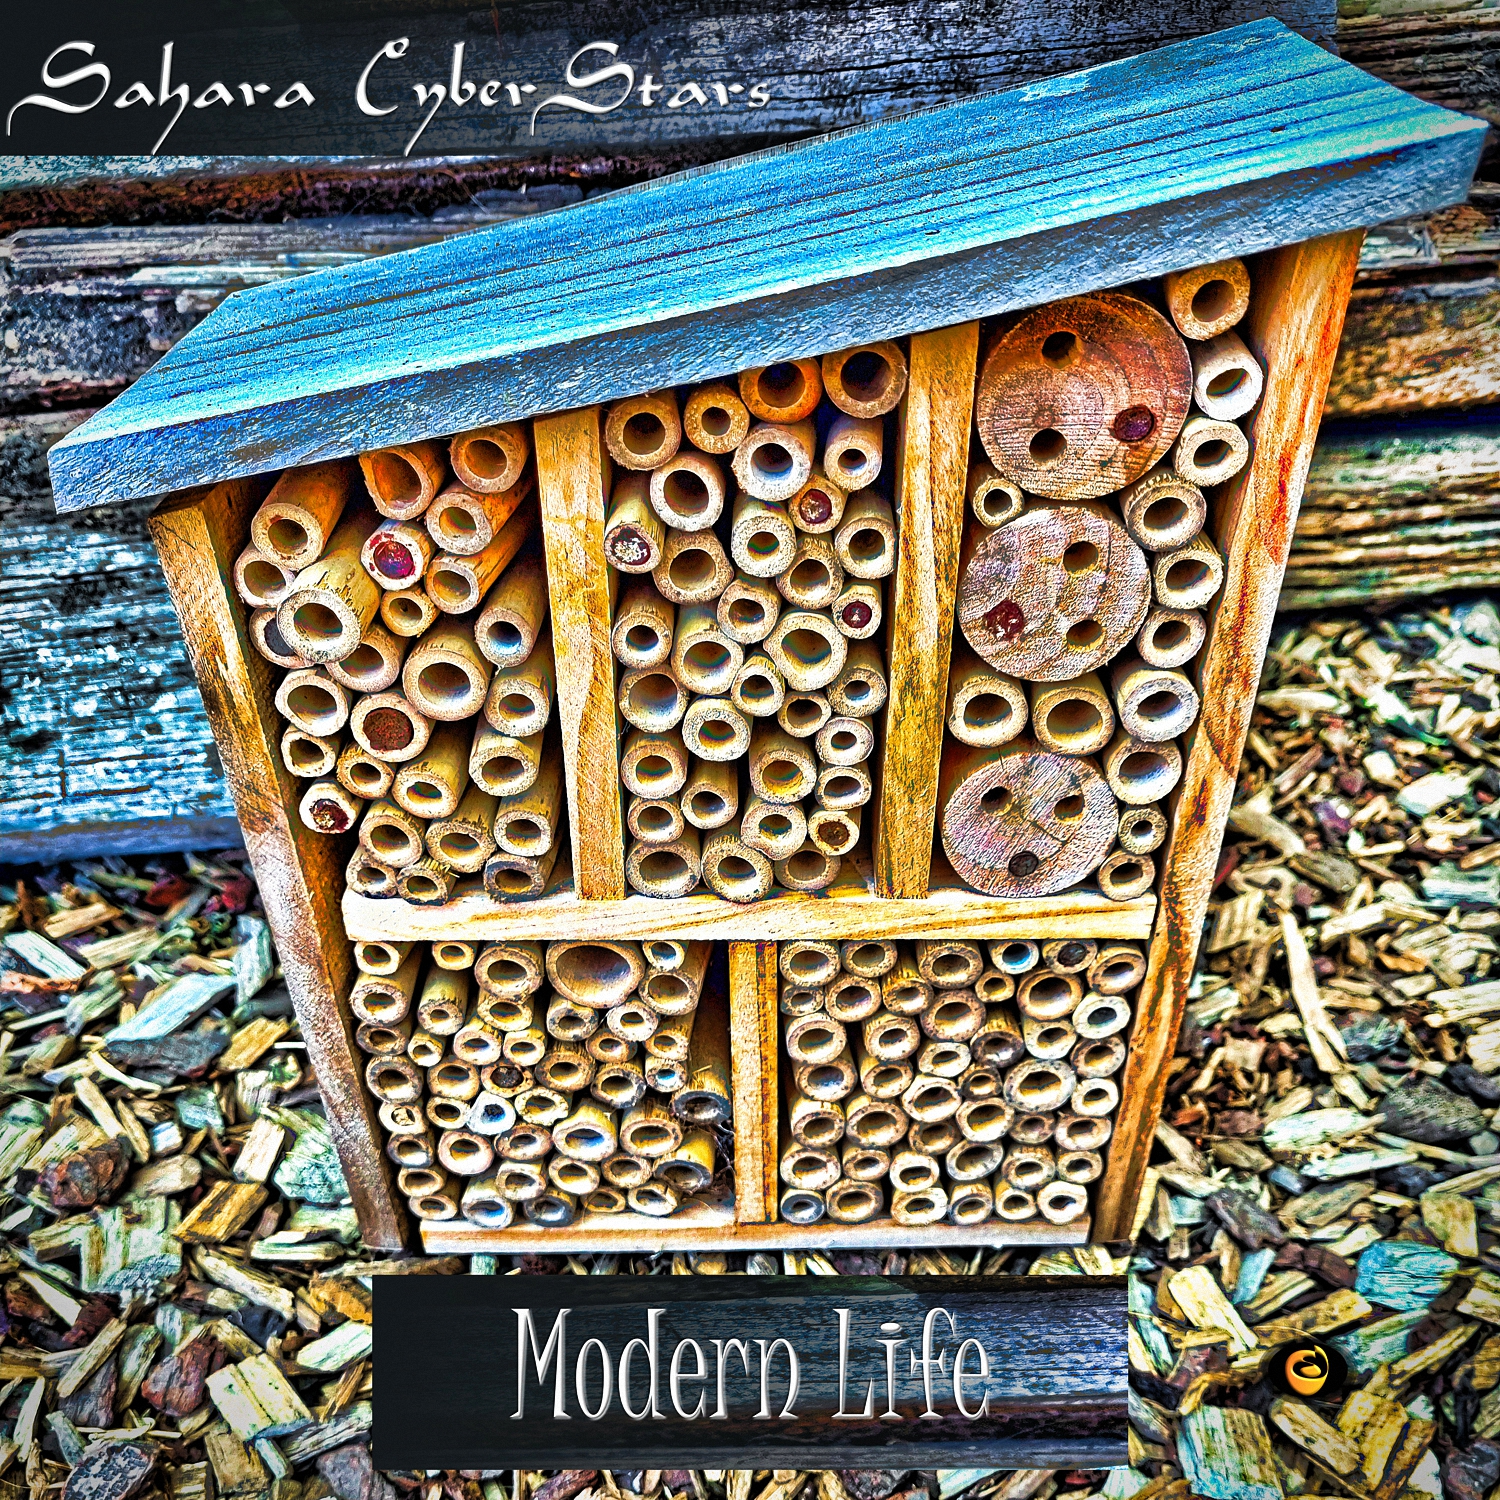 Modern Life by SAHARA cover art